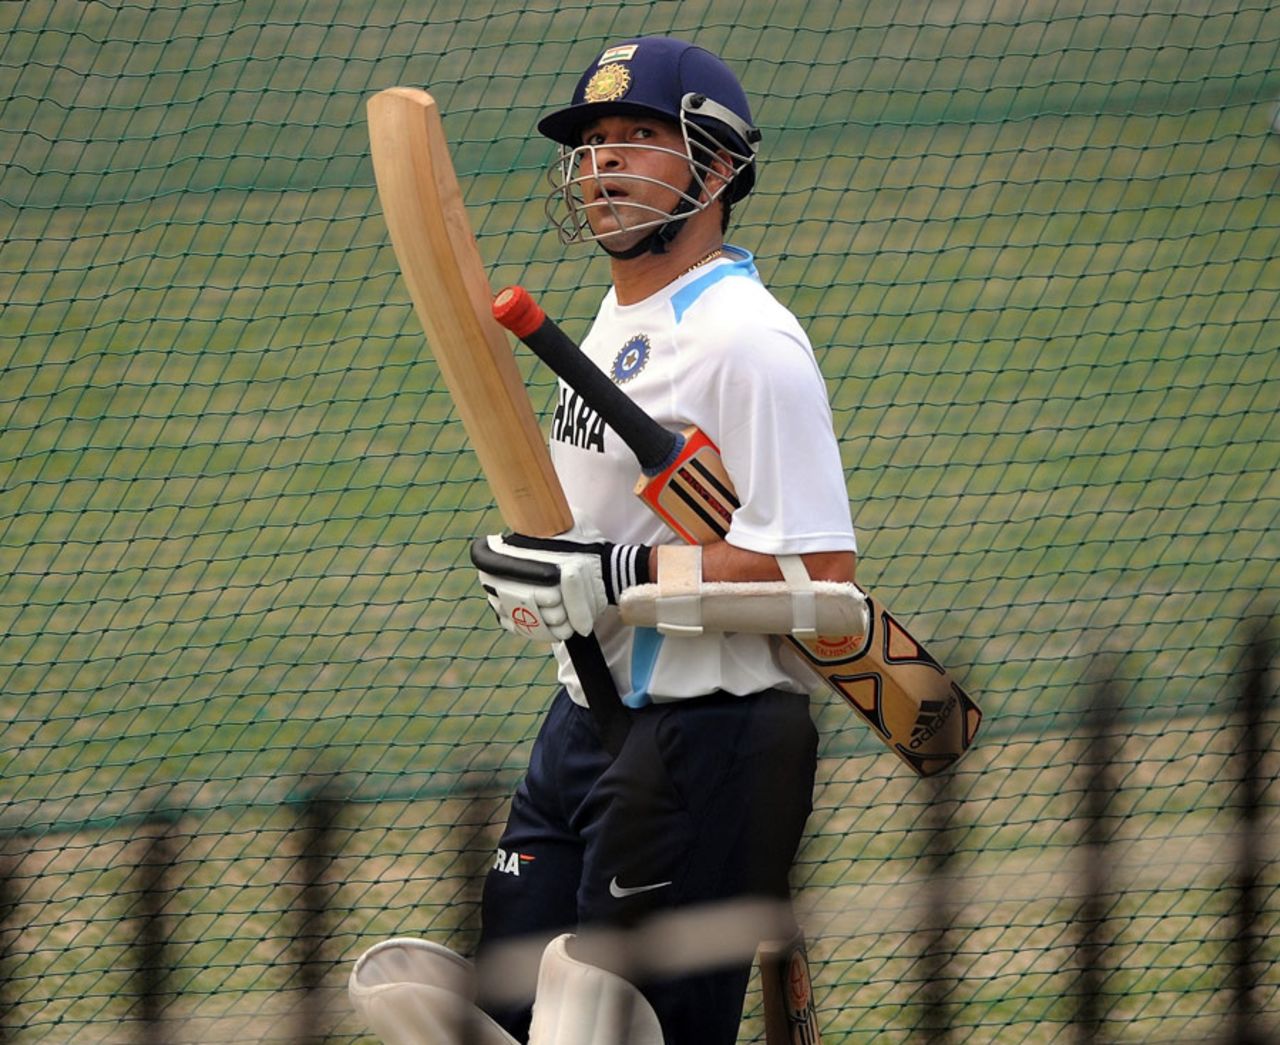 Sachin Tendulkar at the nets ahead of the first Test against West Indies, Delhi, November 4, 2011